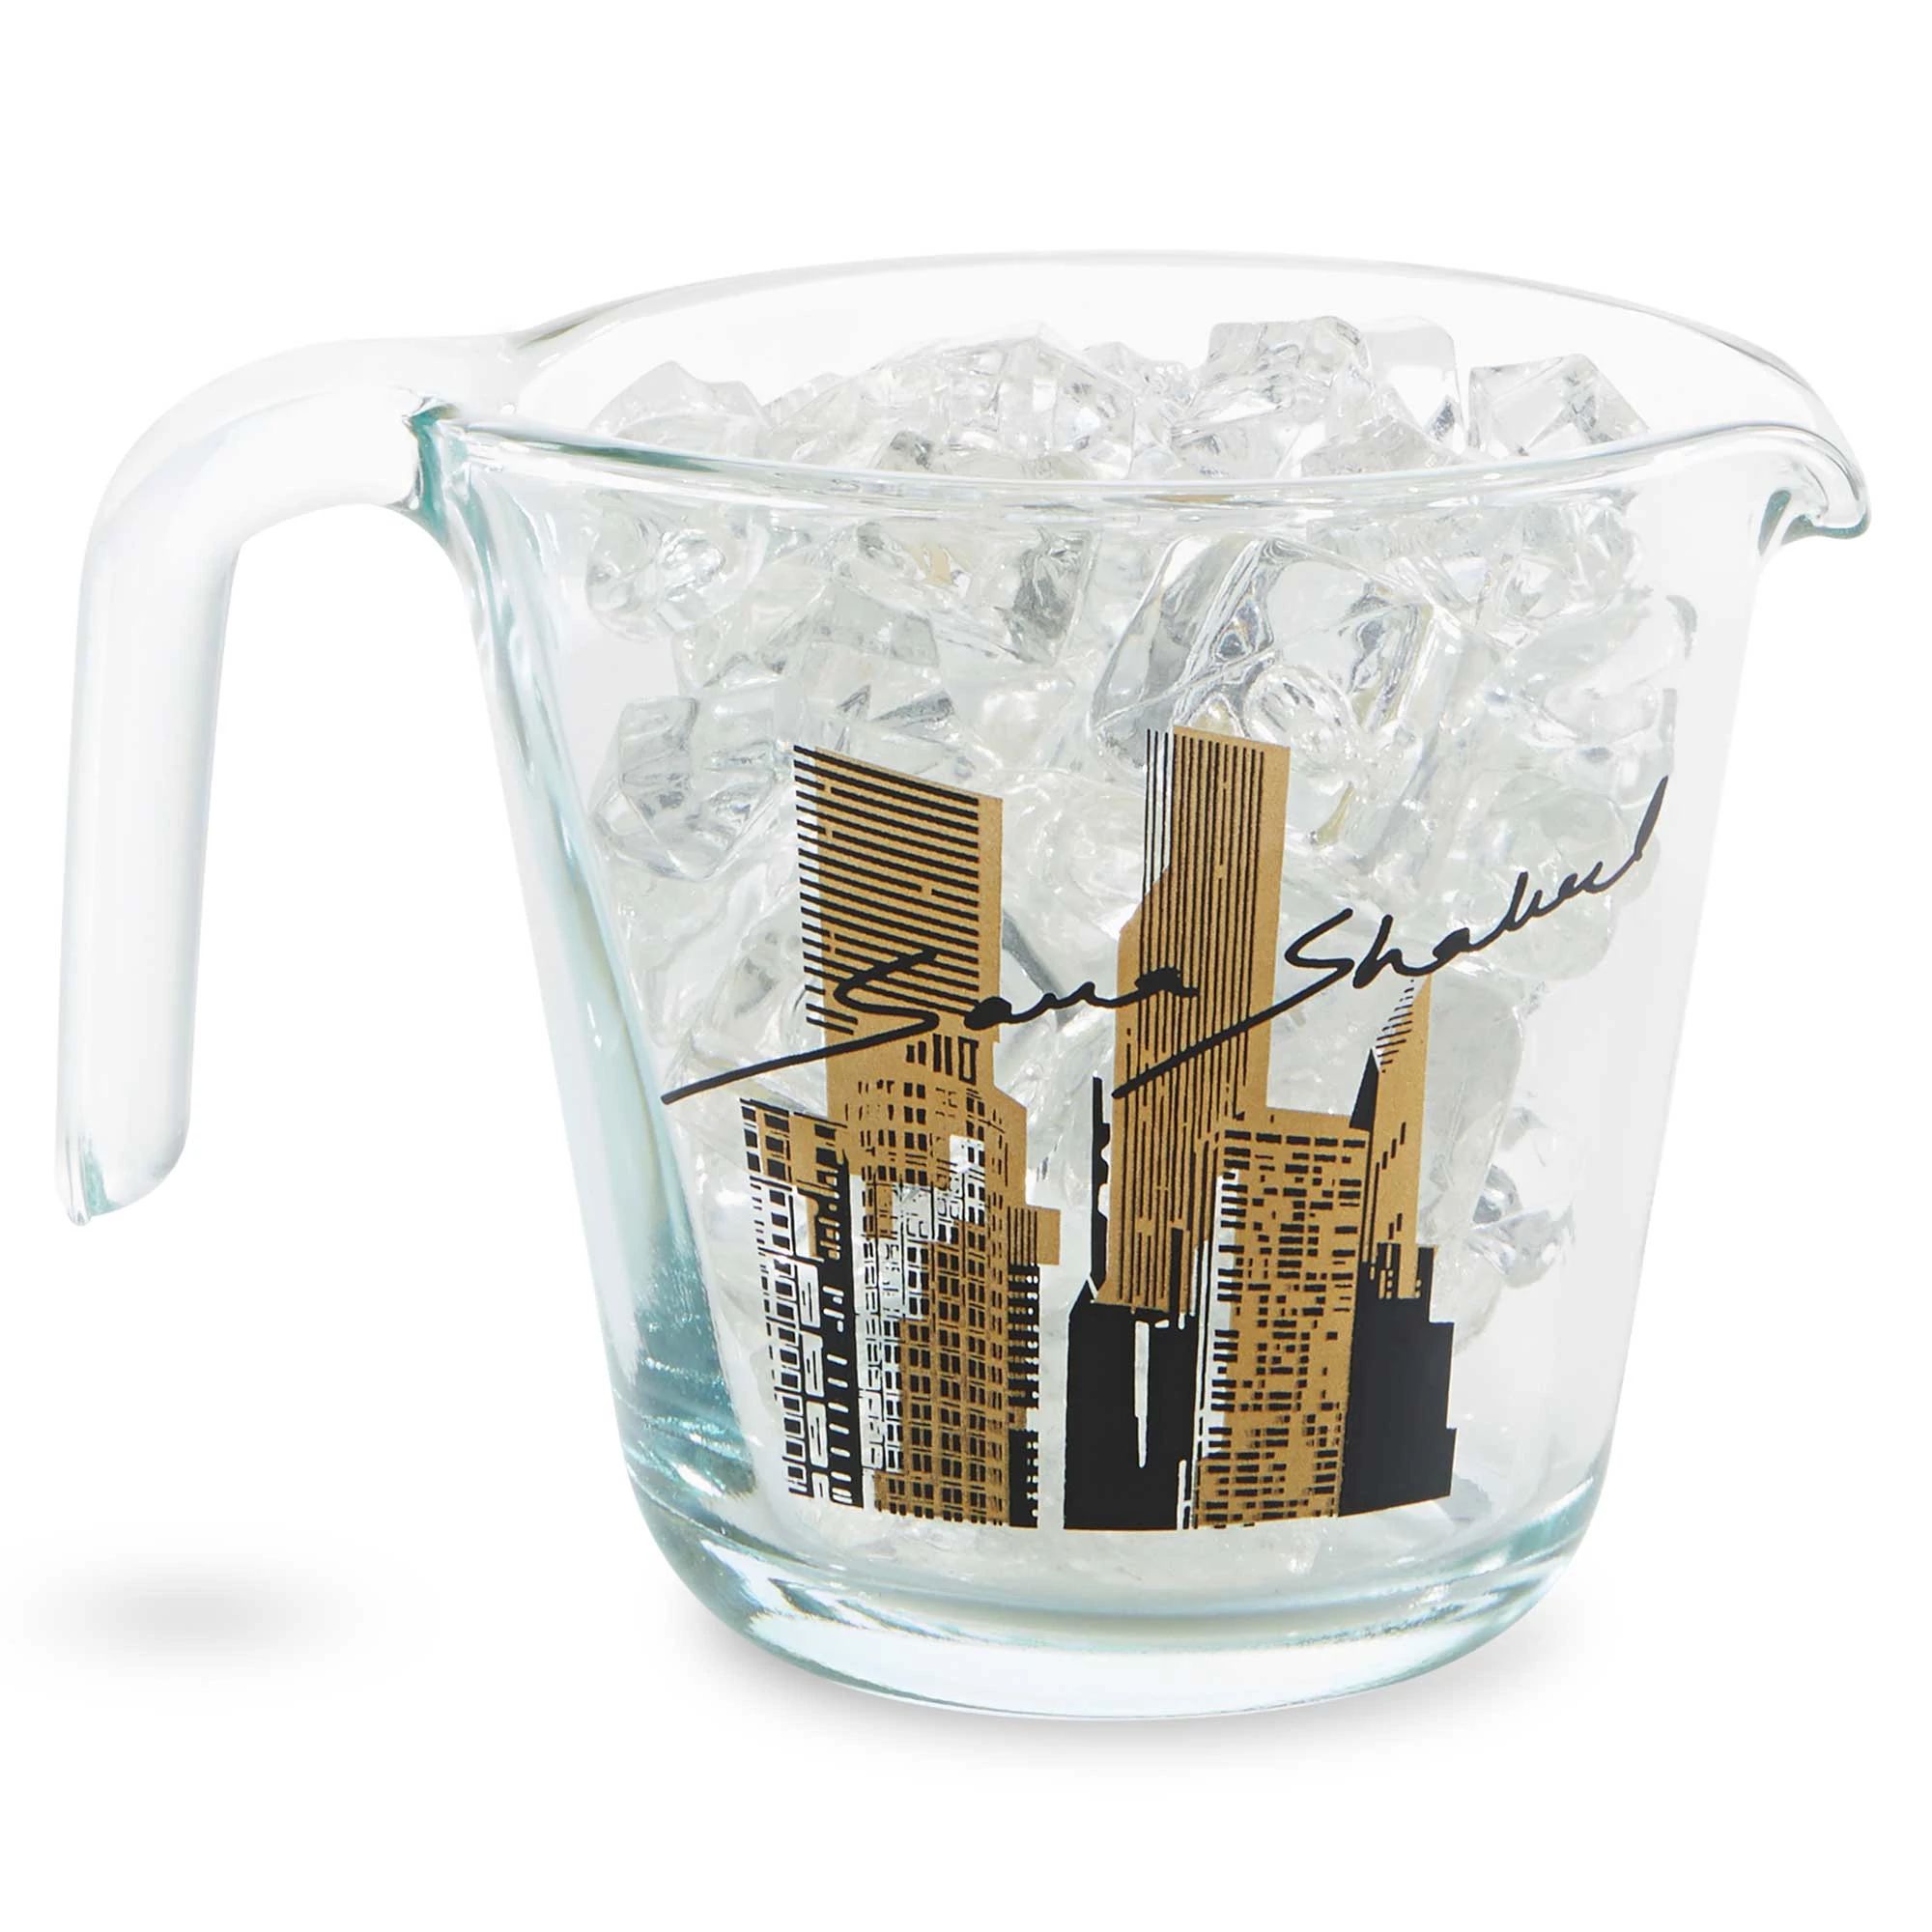 .com Pyrex 2 Piece Glass Measuring Cup Set, Includes 1-Cup